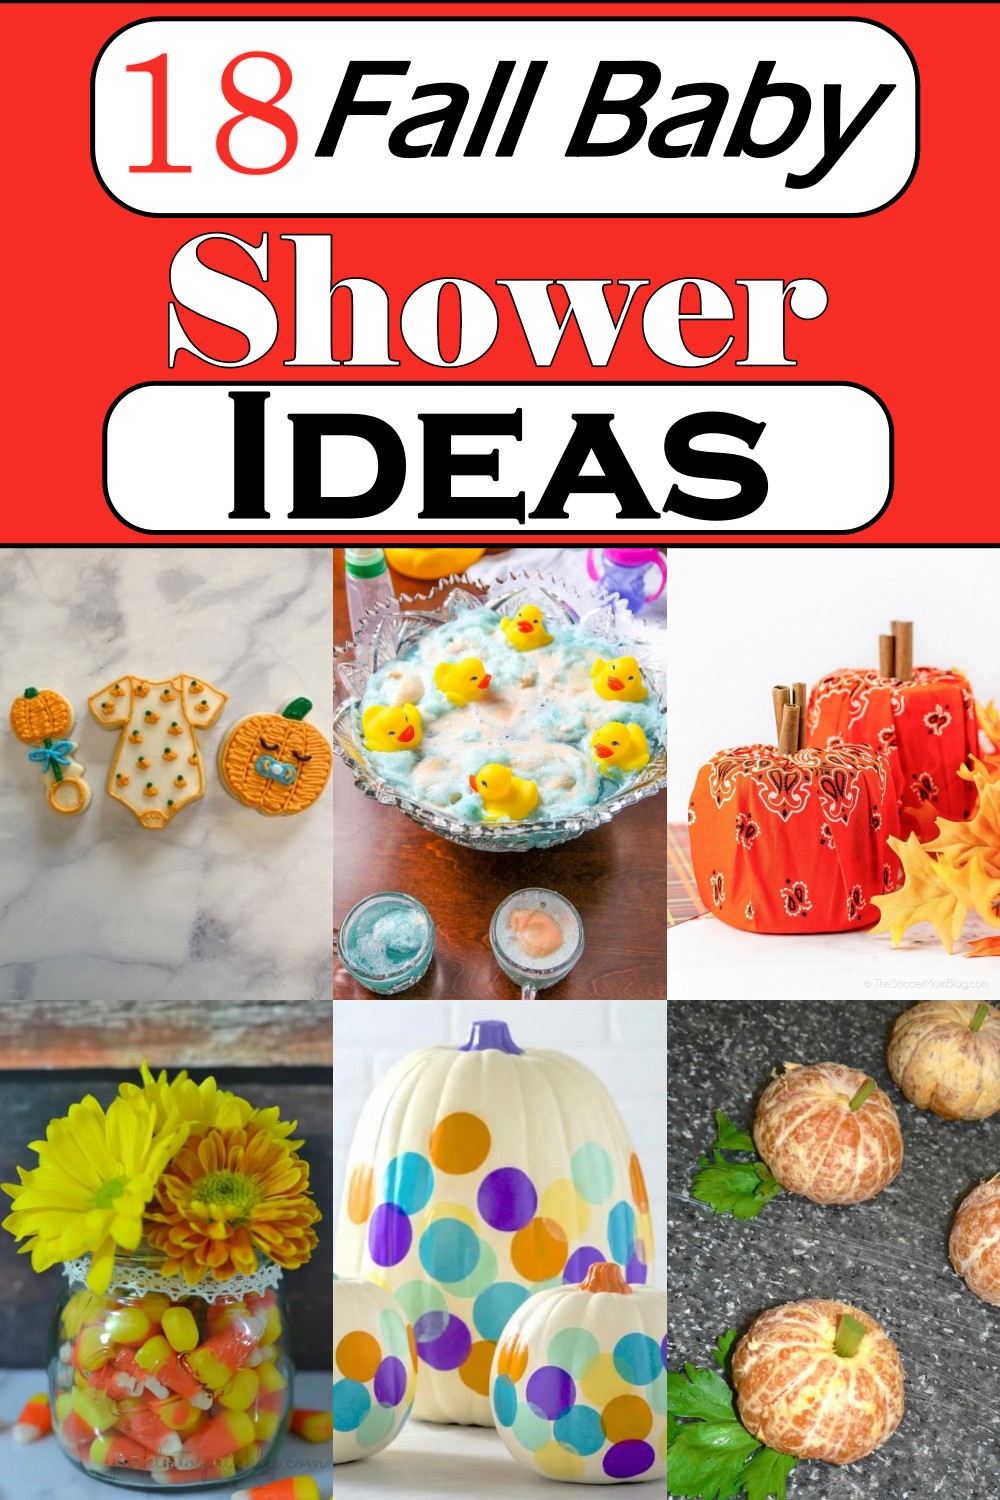 Fall Baby Shower Ideas